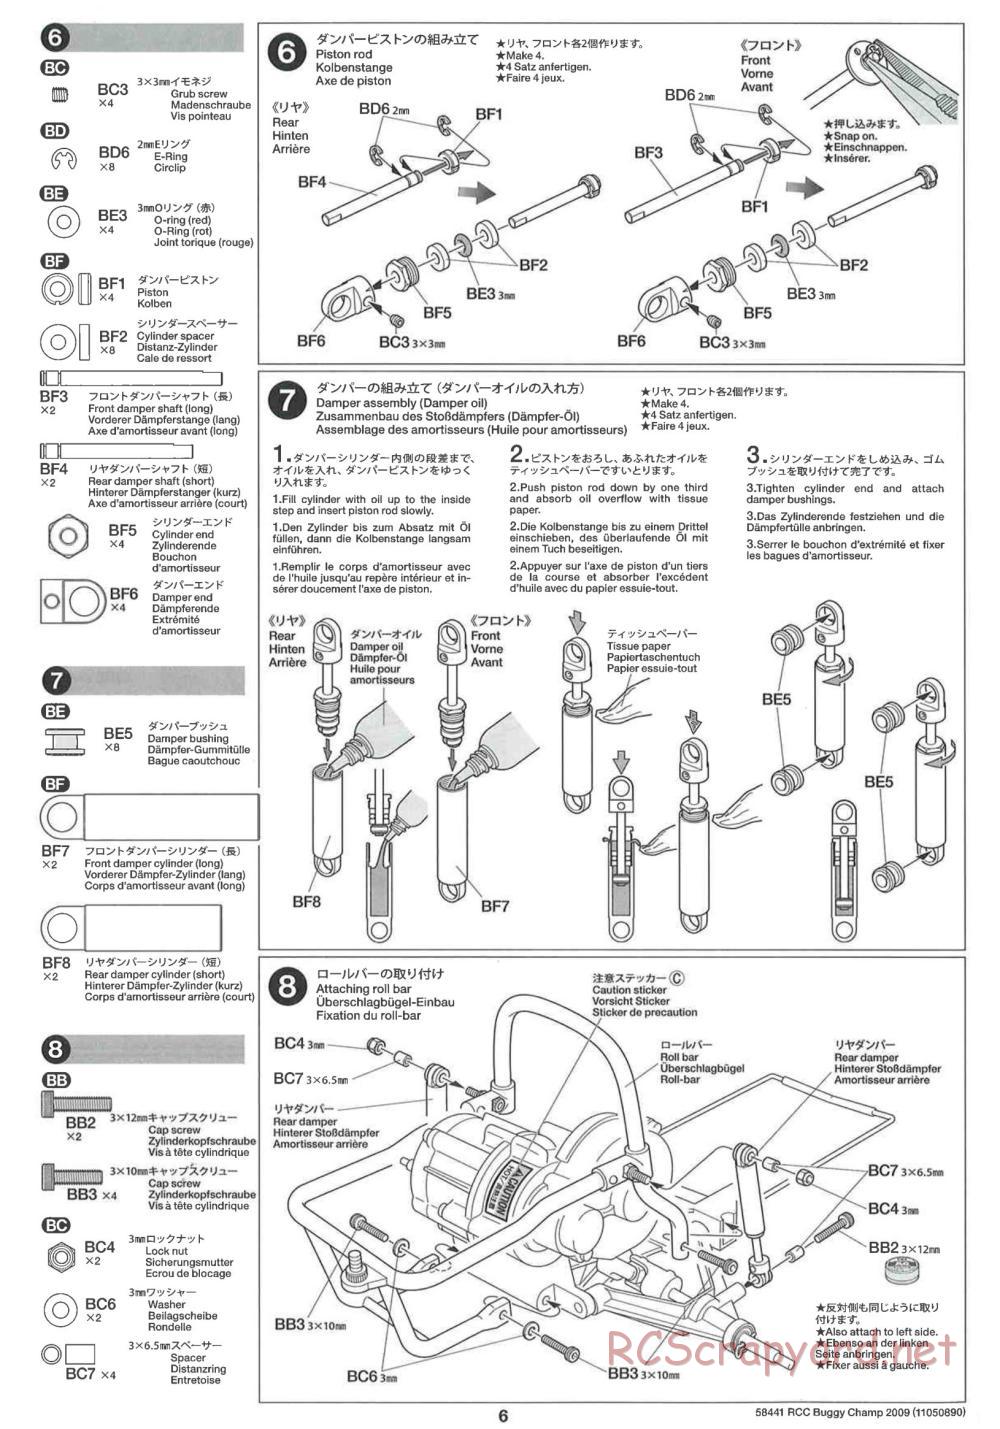 Tamiya - Buggy Champ Chassis - Manual - Page 6